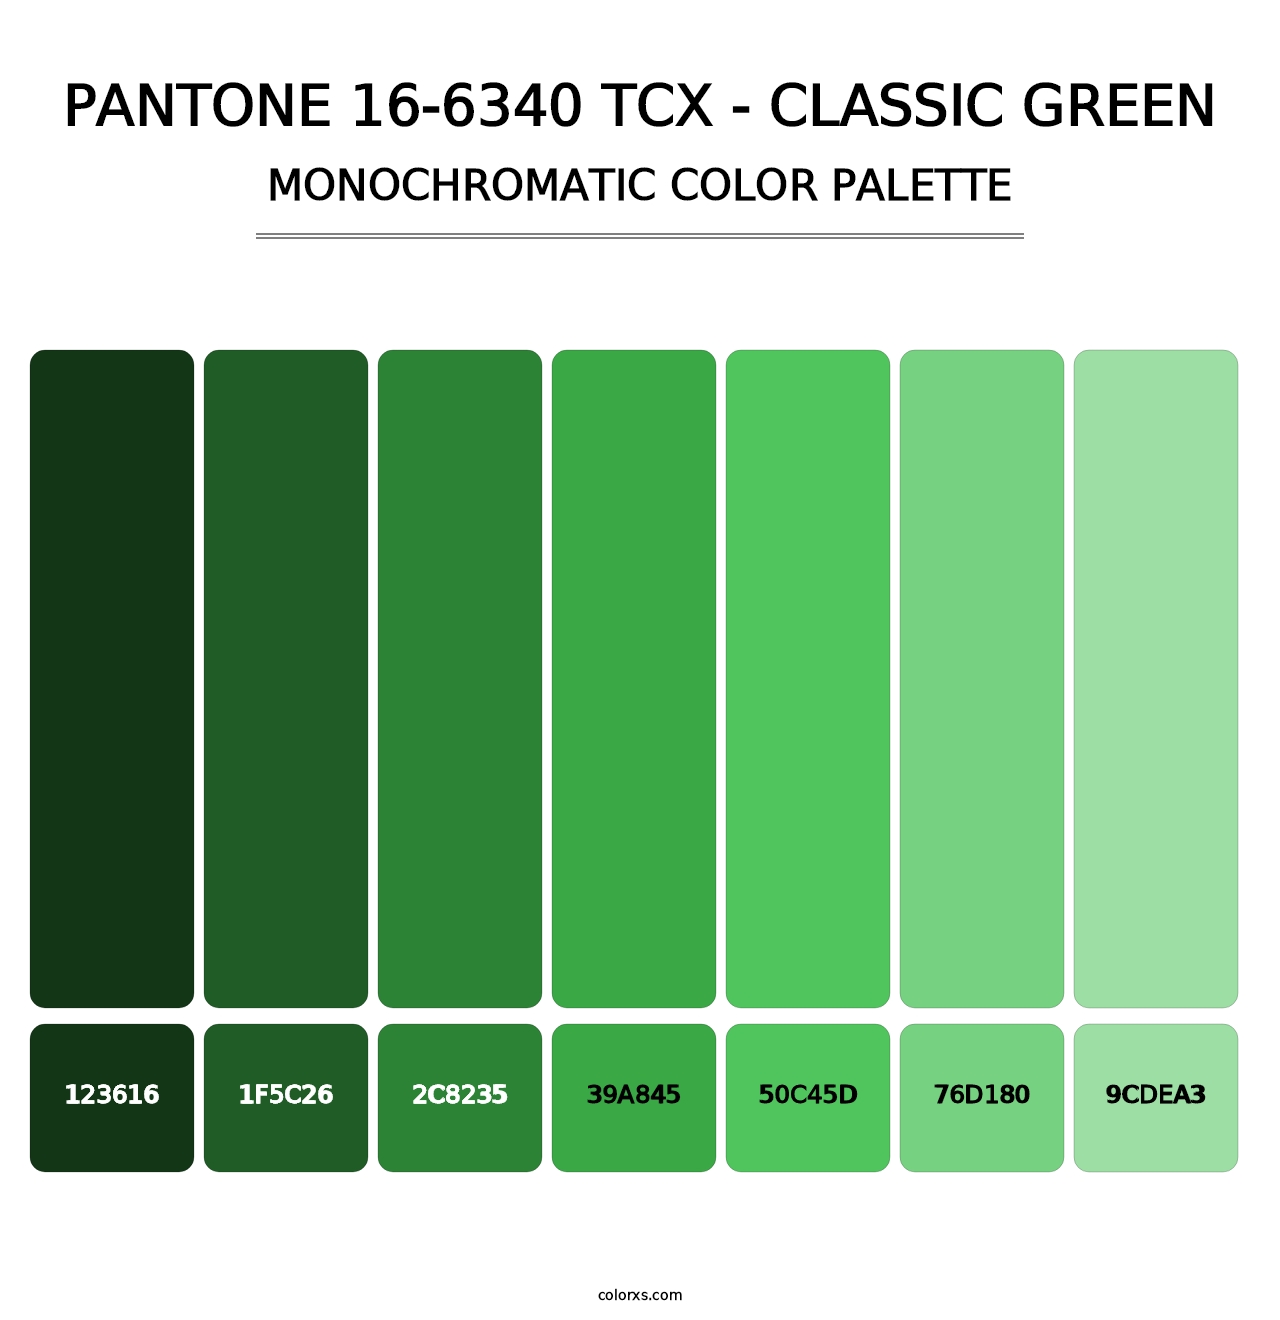 PANTONE 16-6340 TCX - Classic Green - Monochromatic Color Palette